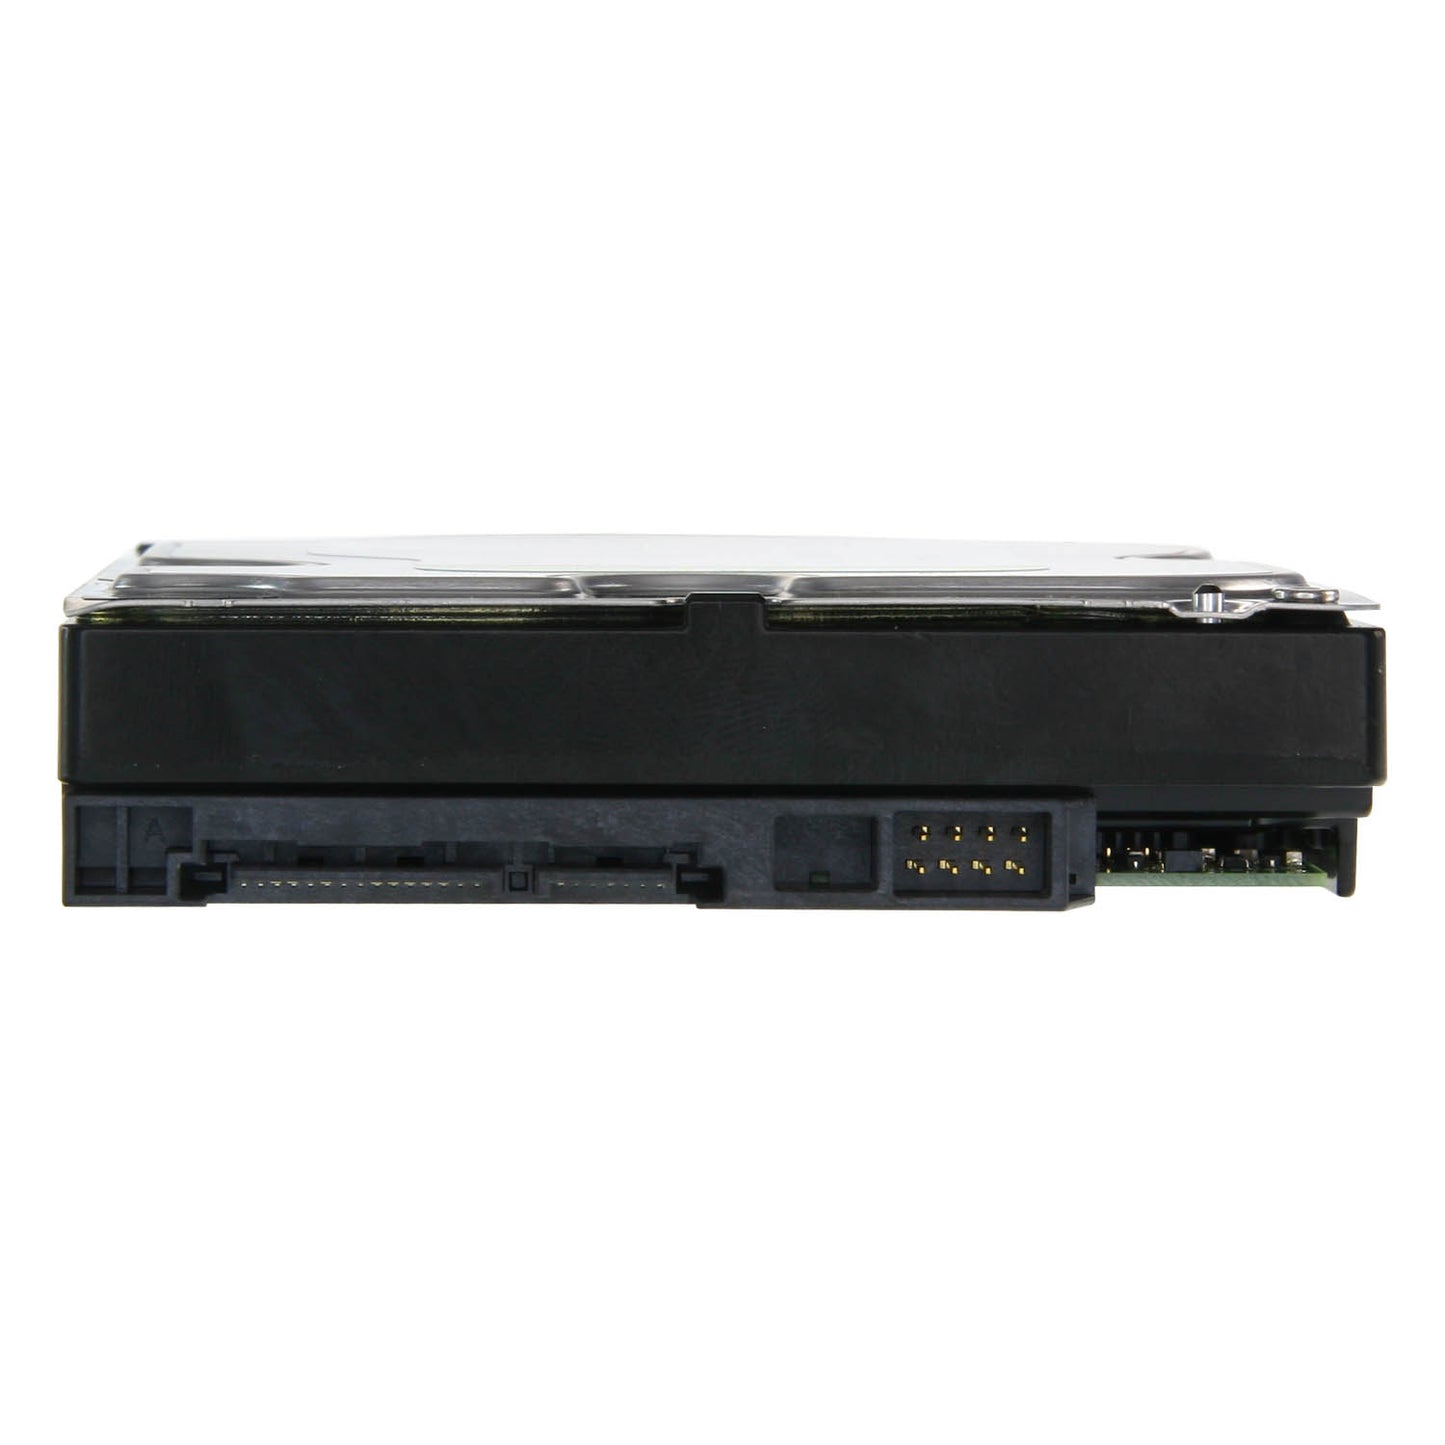 Disco Duro - Capacidad 3 TB - Interfaz SATA 6 GB/s - Modelo WD30PURX - Especial para videograbadores - Solo o instalado en DVR